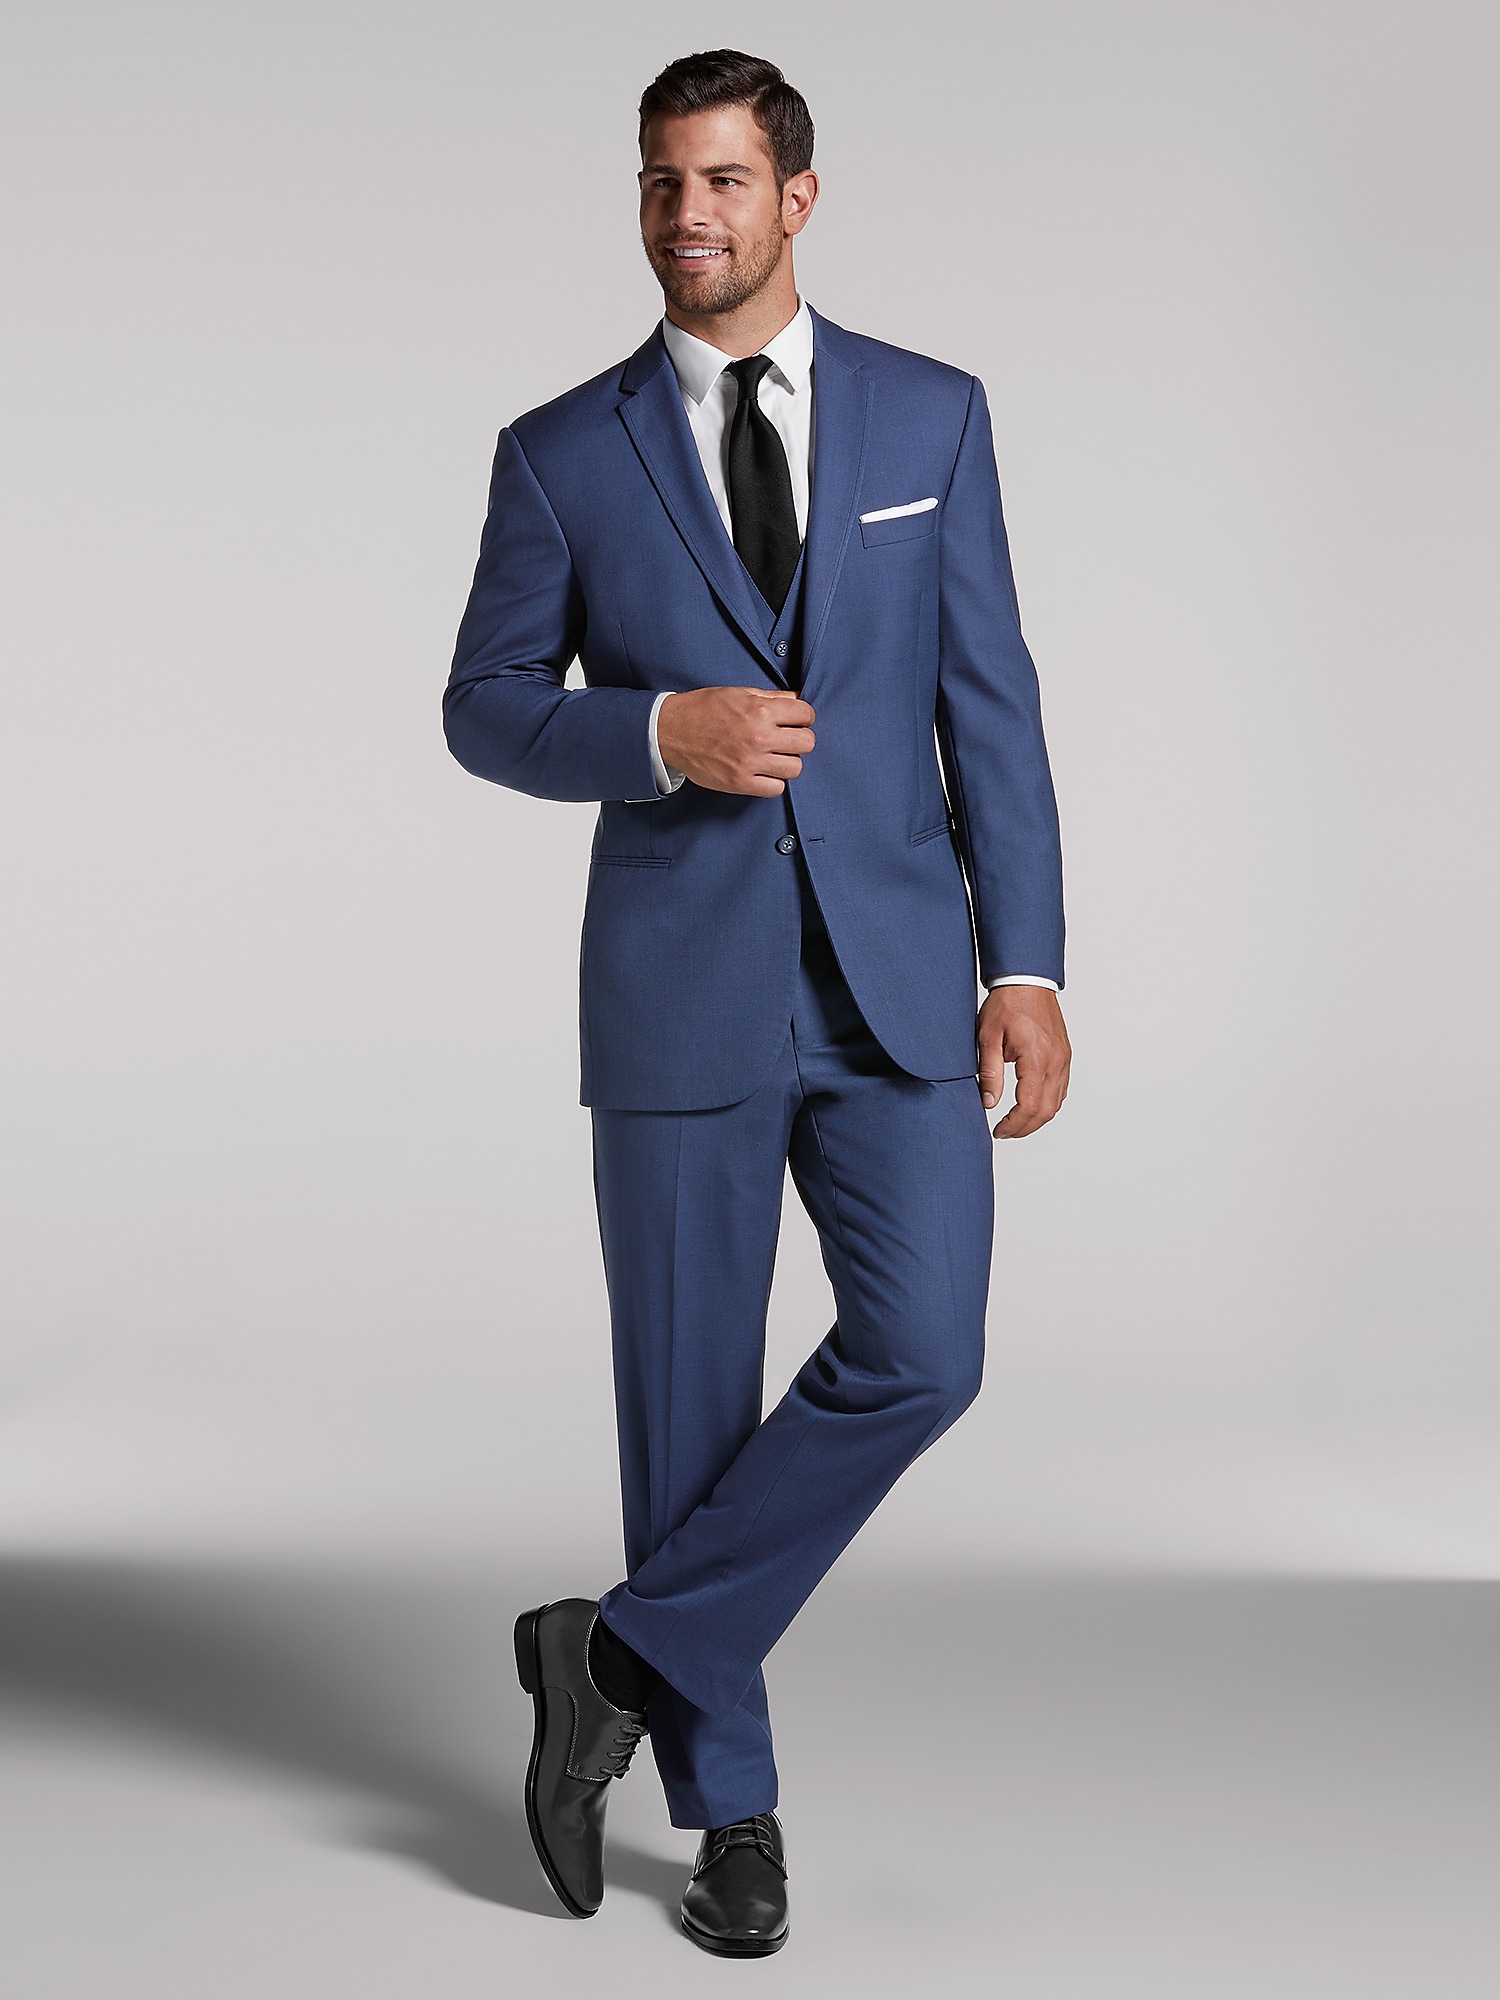 Descubrir 35+ imagen calvin klein blue suit wedding